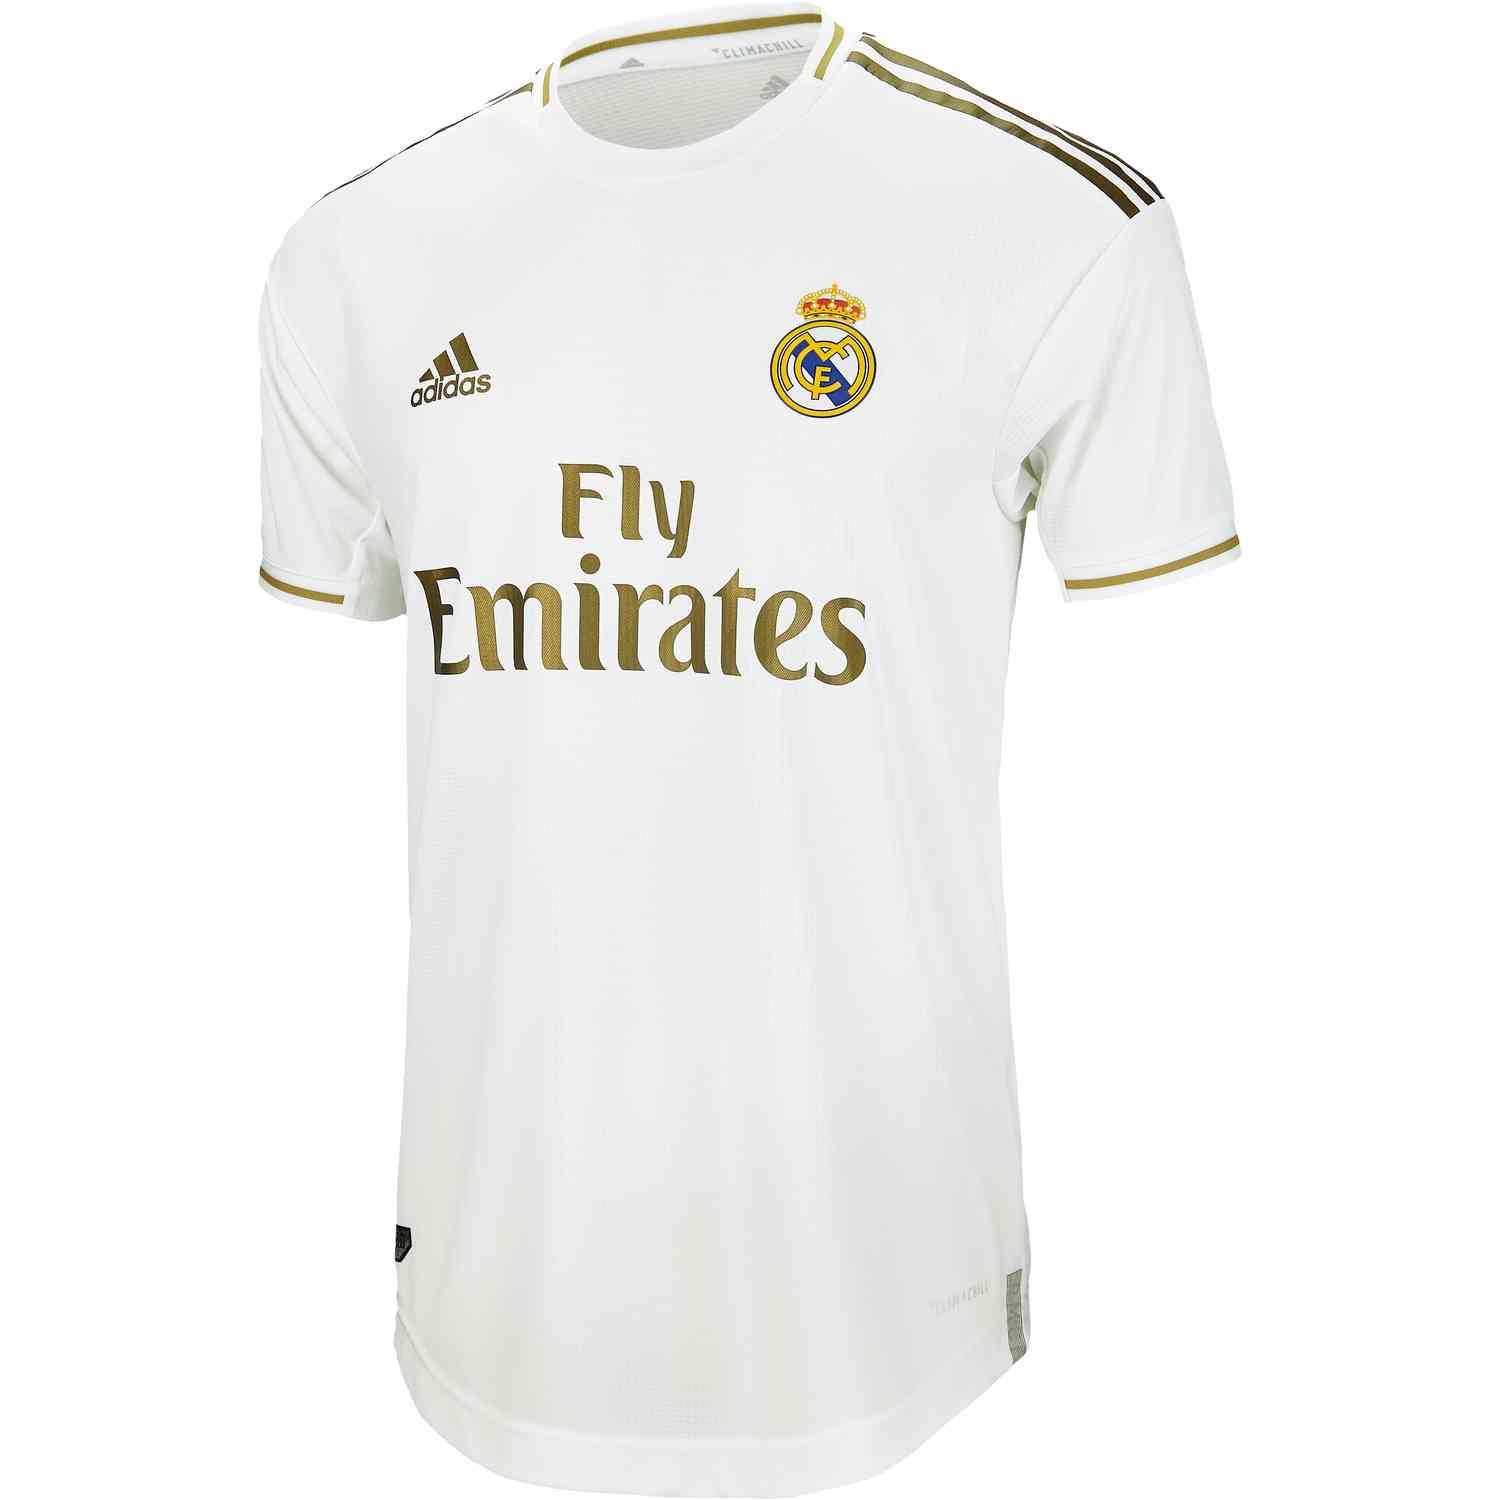 New Real Madrid Shirt Season 2019/20 All Sizes 